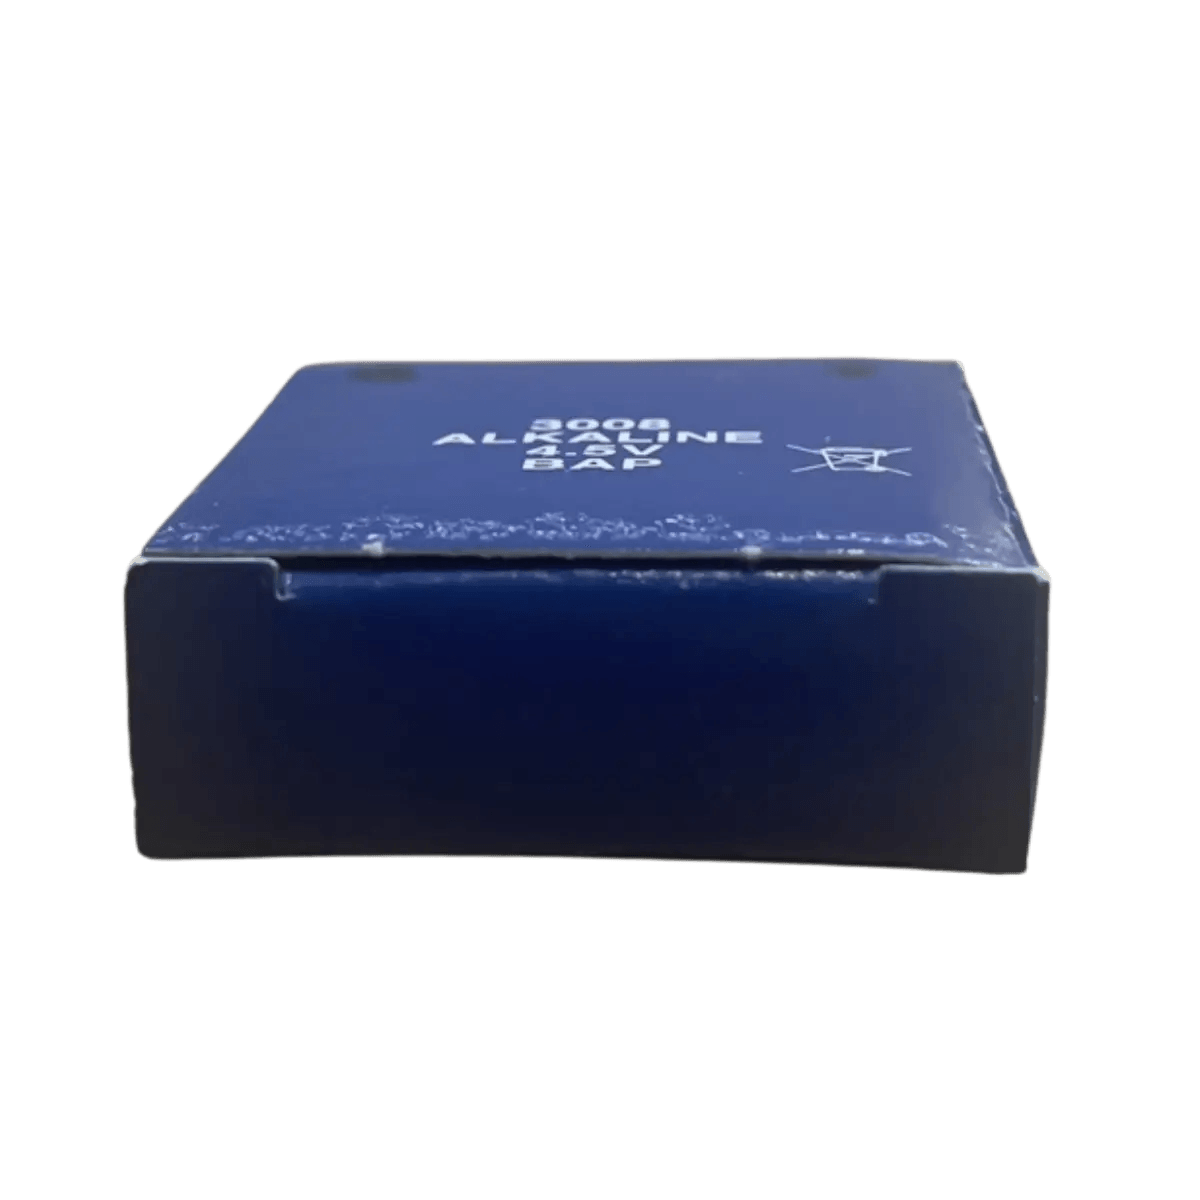 3008 Pile Alcaline 4.5V 3R8 - WONDER GNOMA PILE PLATE